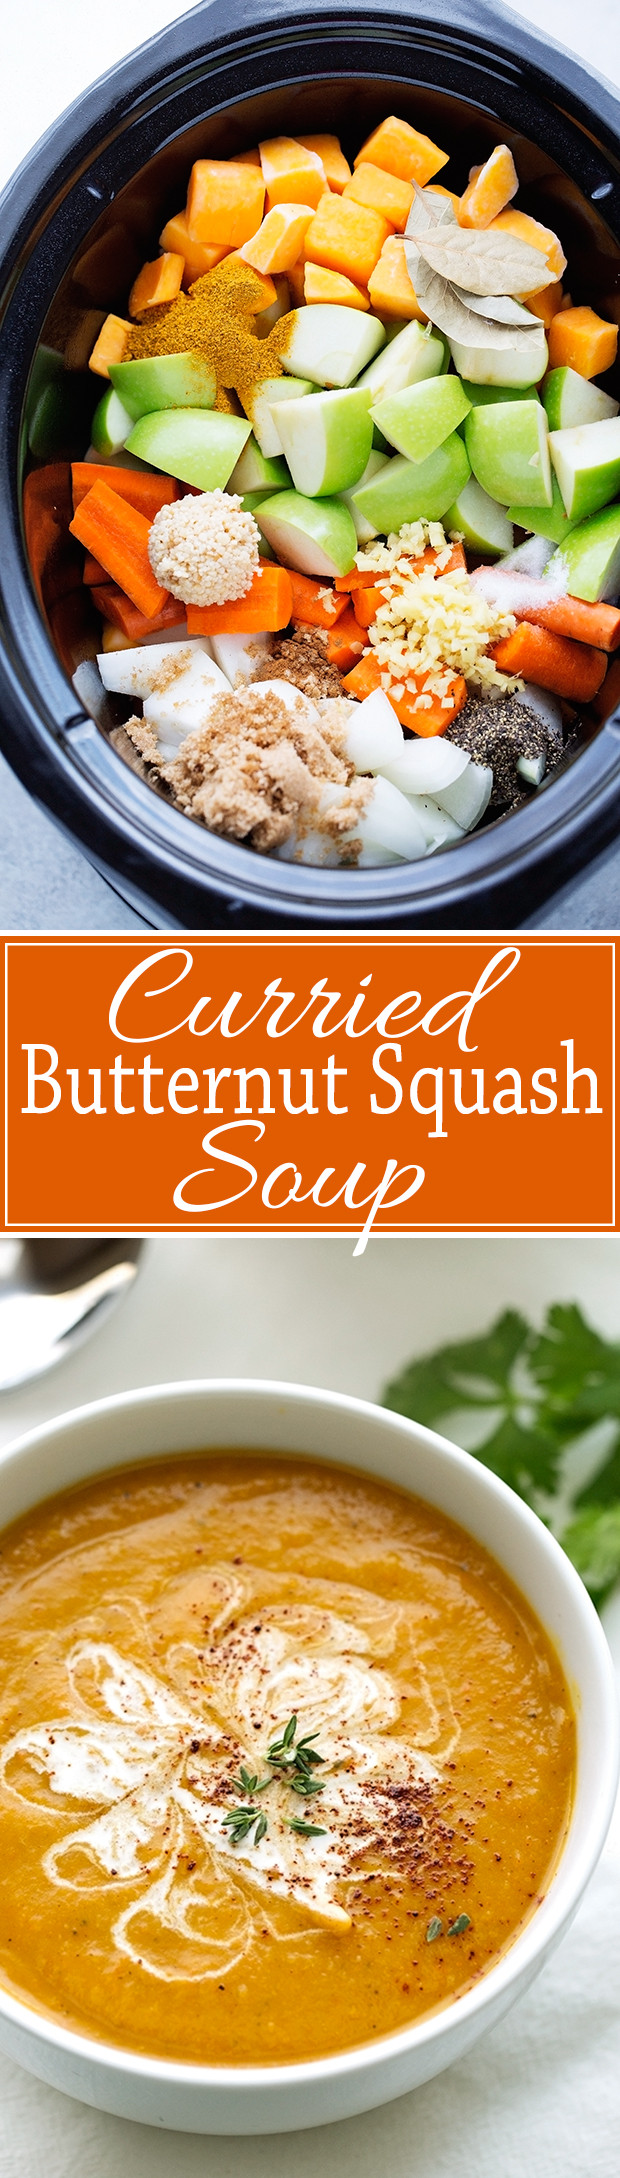 Butternut Squash Soup Crockpot
 Slow Cooker Curried Butternut Squash Soup Recipe